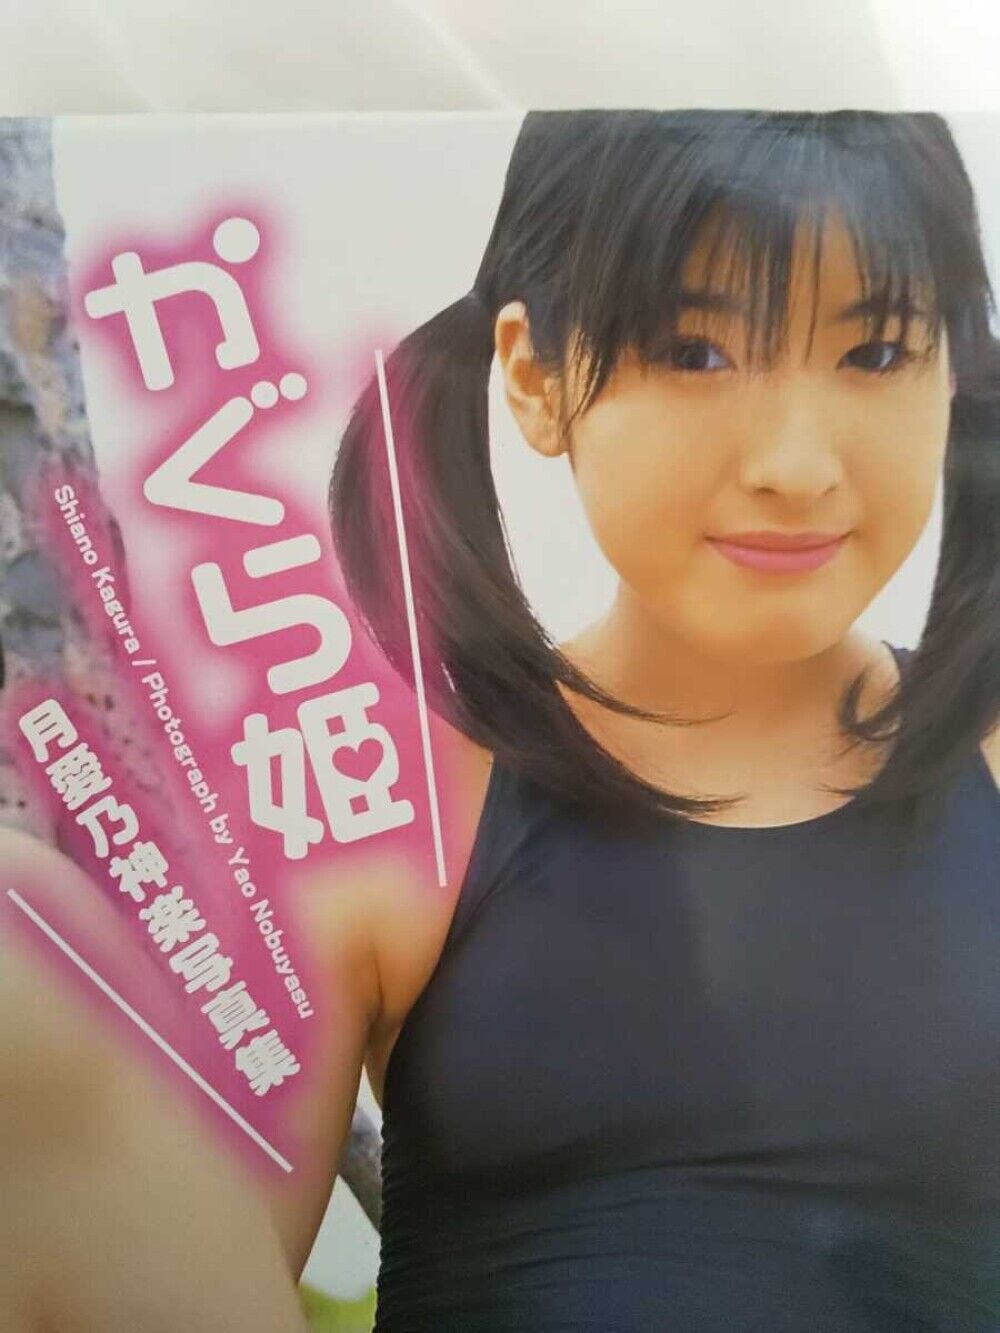 Kagura Shiano kagura princess Photo Book 14 YEARS OLD Used